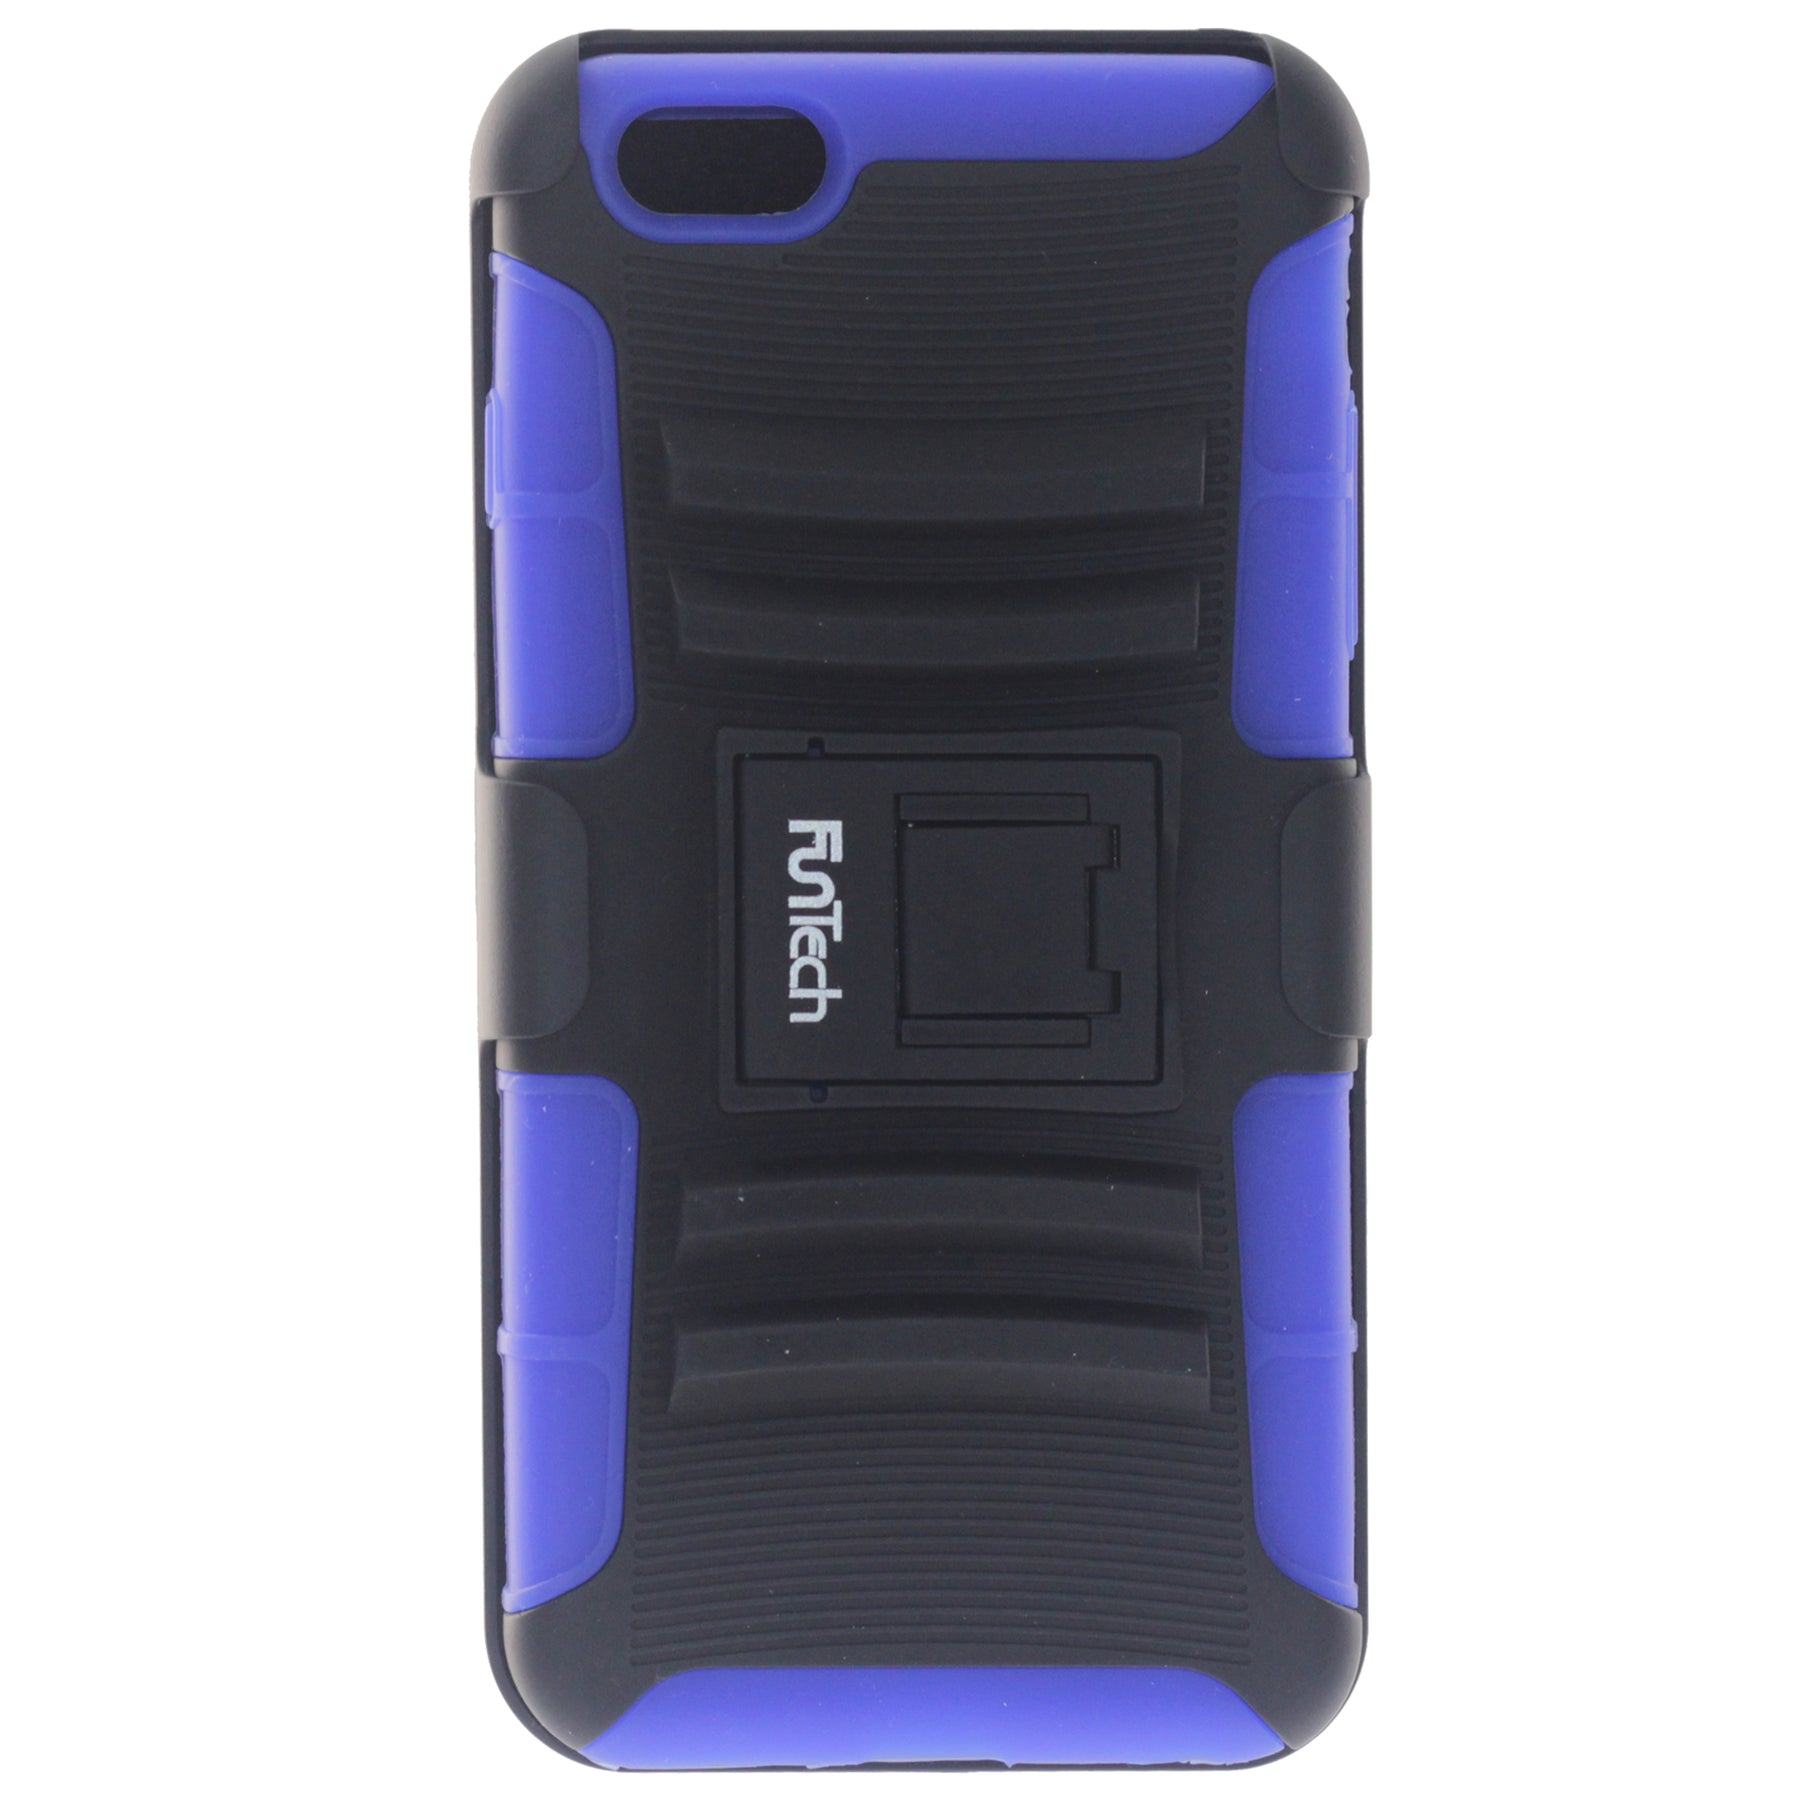 Apple iPhone 6/6S Plus Rugged Shockproof Case with Beltclip, Color Black/Blue